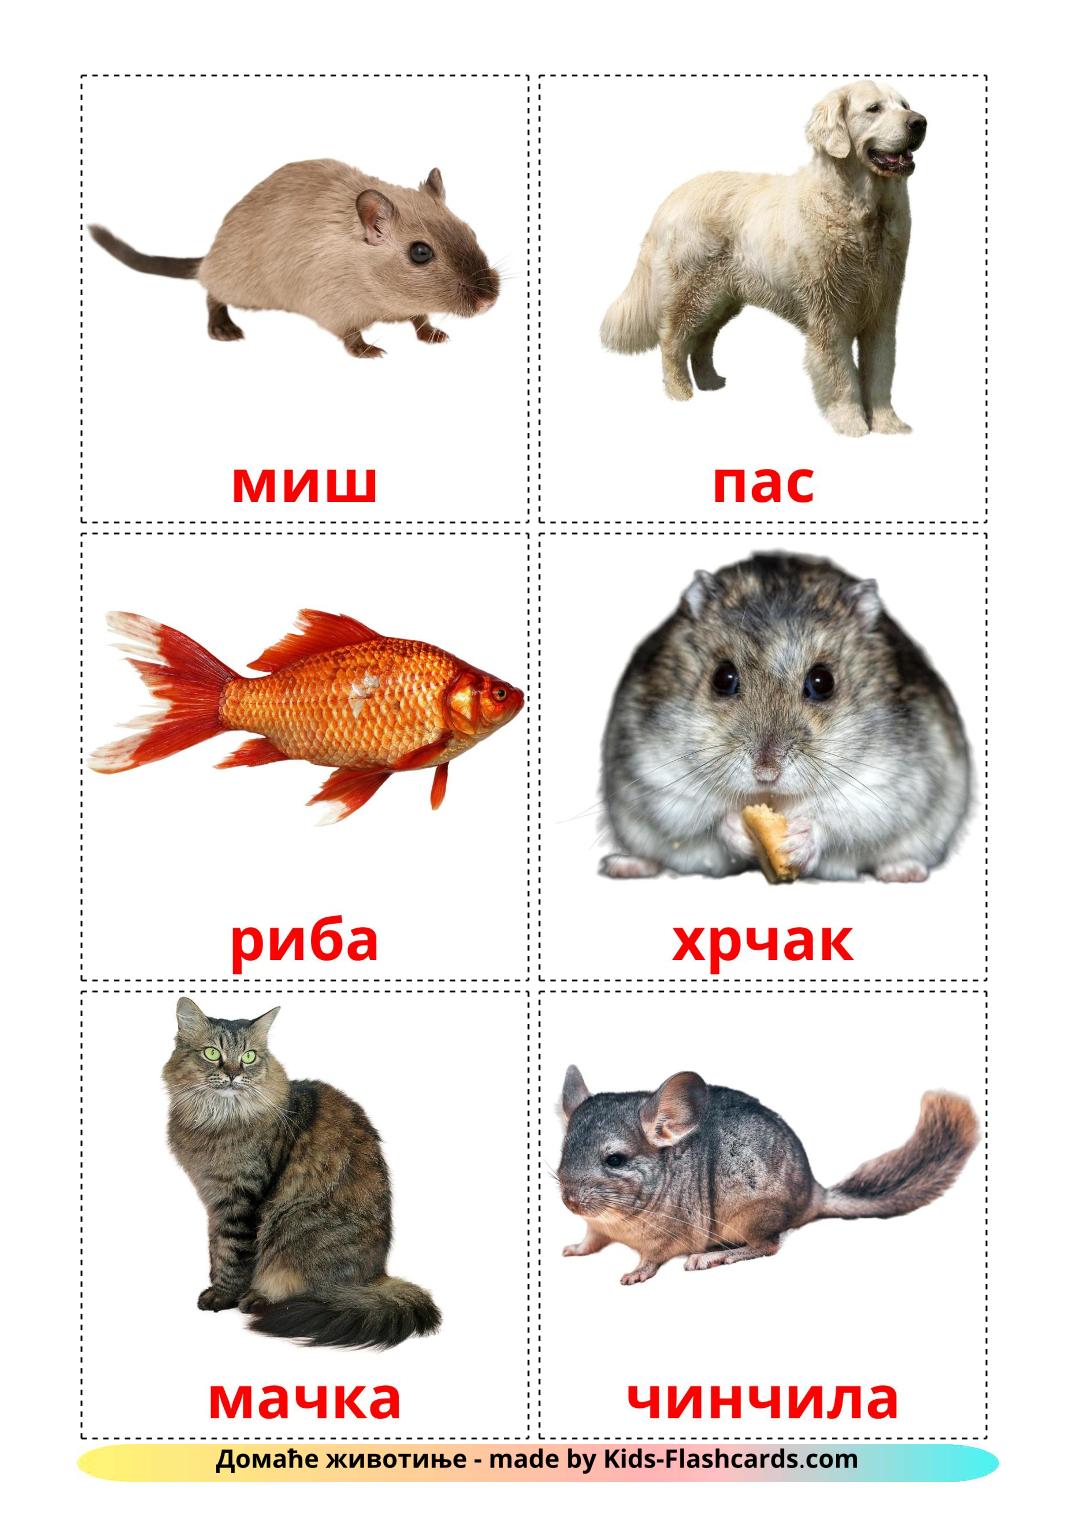 Domestic animals - 10 Free Printable serbian(cyrillic) Flashcards 